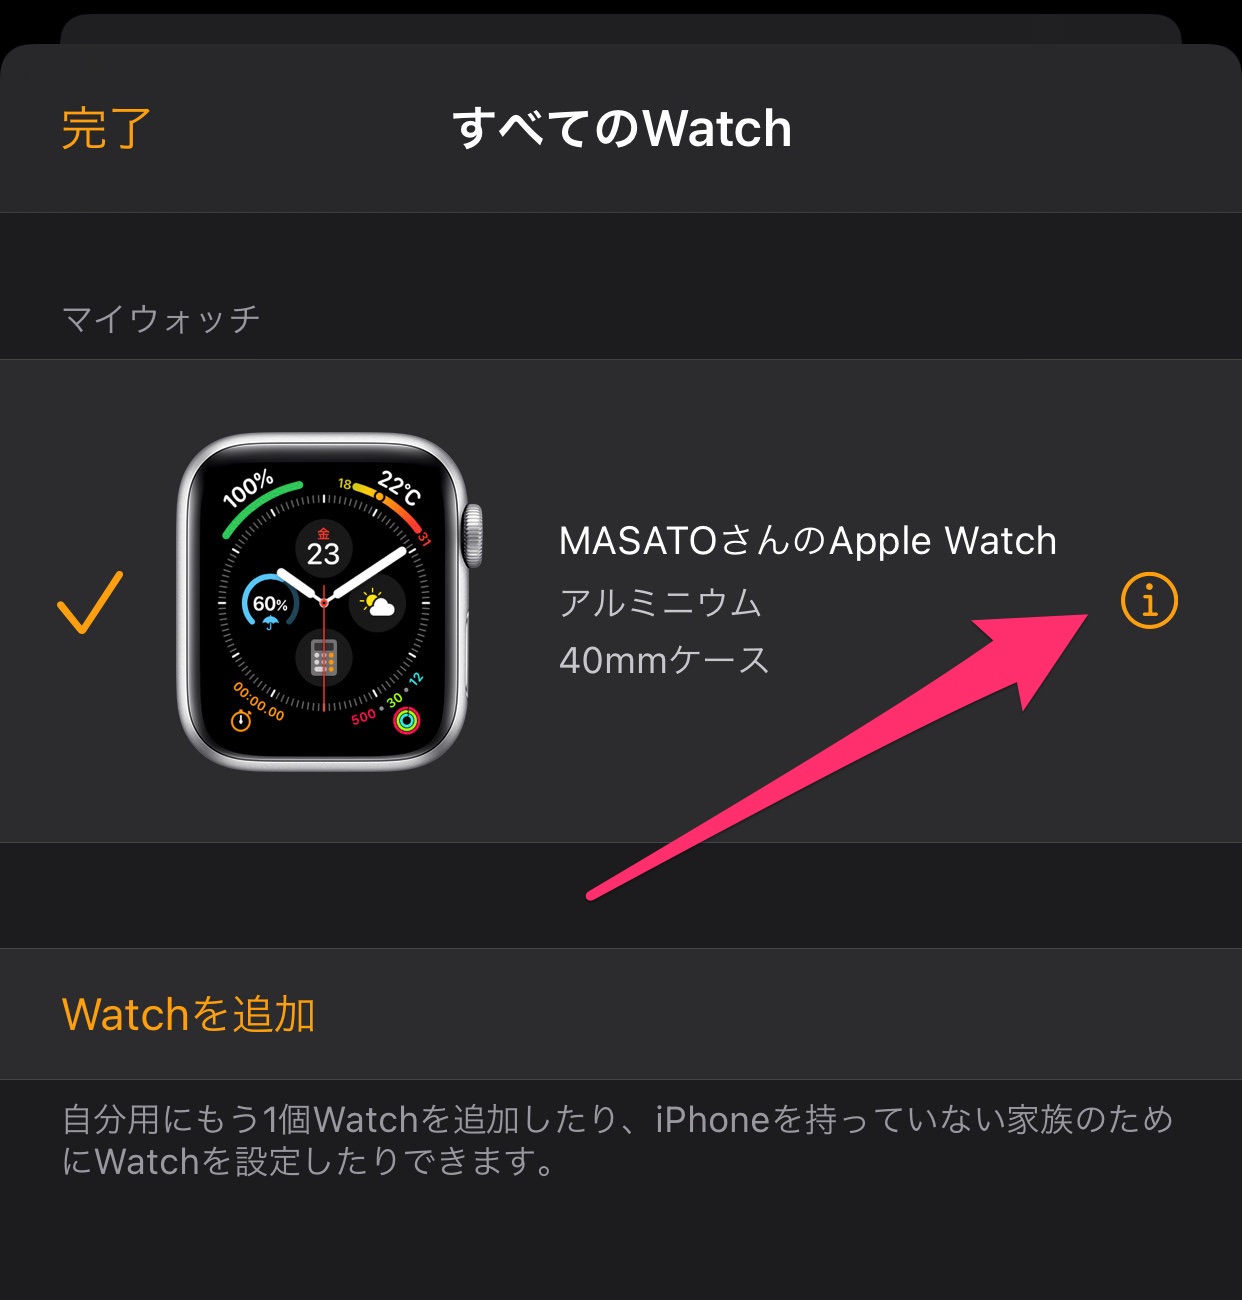 【Apple Watch 6】機種変更しようとしていきなり失敗した話【my new gear...】 22 13 04